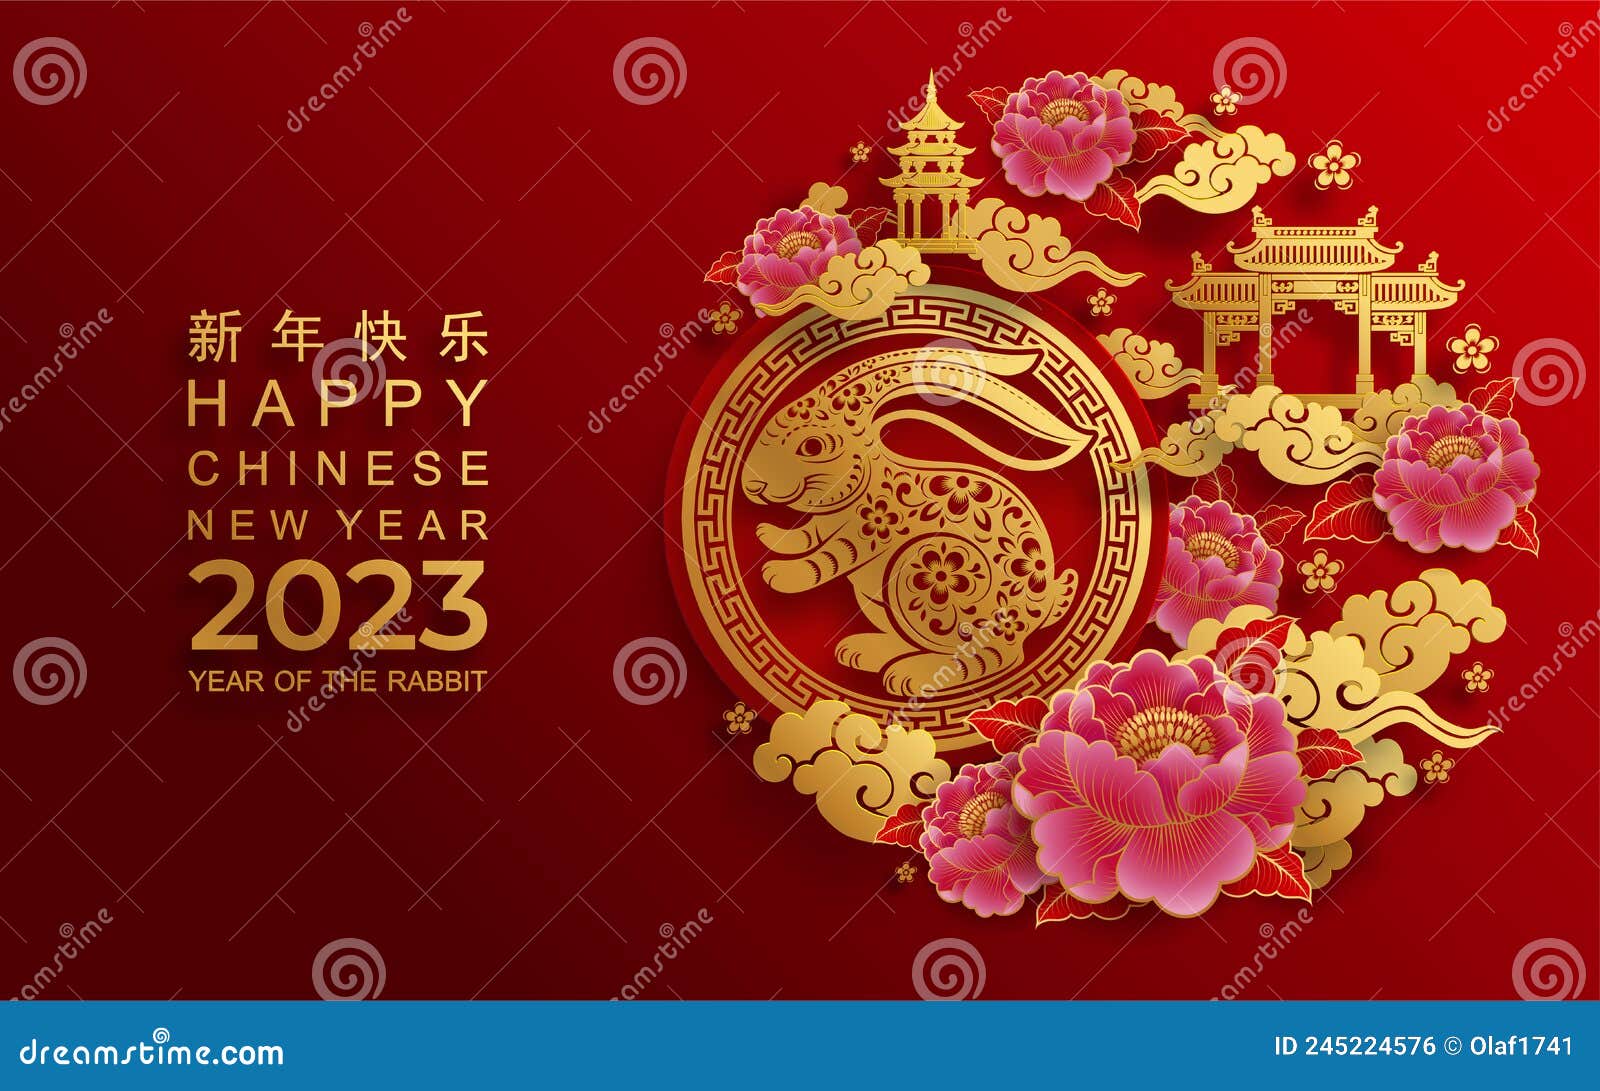 happy chinese new year 2023